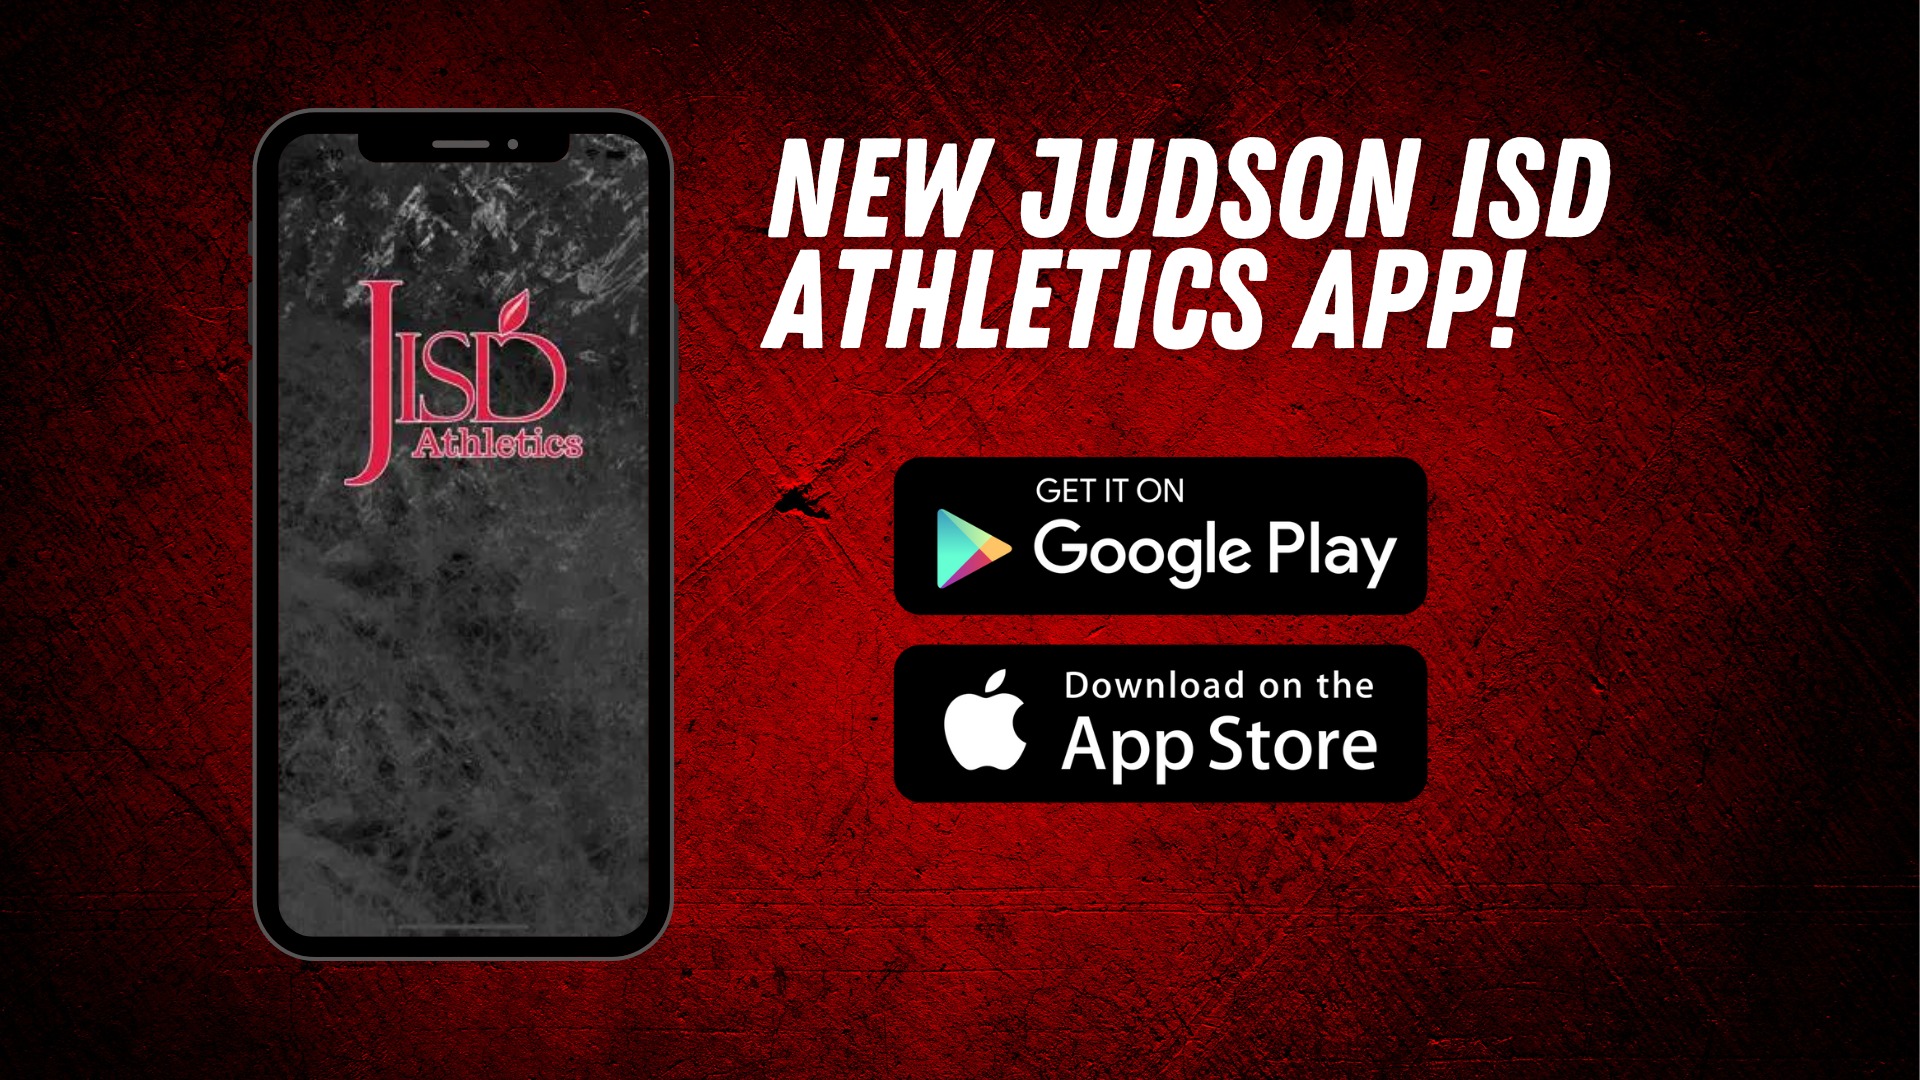 Kitty Hawk MSSlide 5 - Judson ISD Athletics releases new app